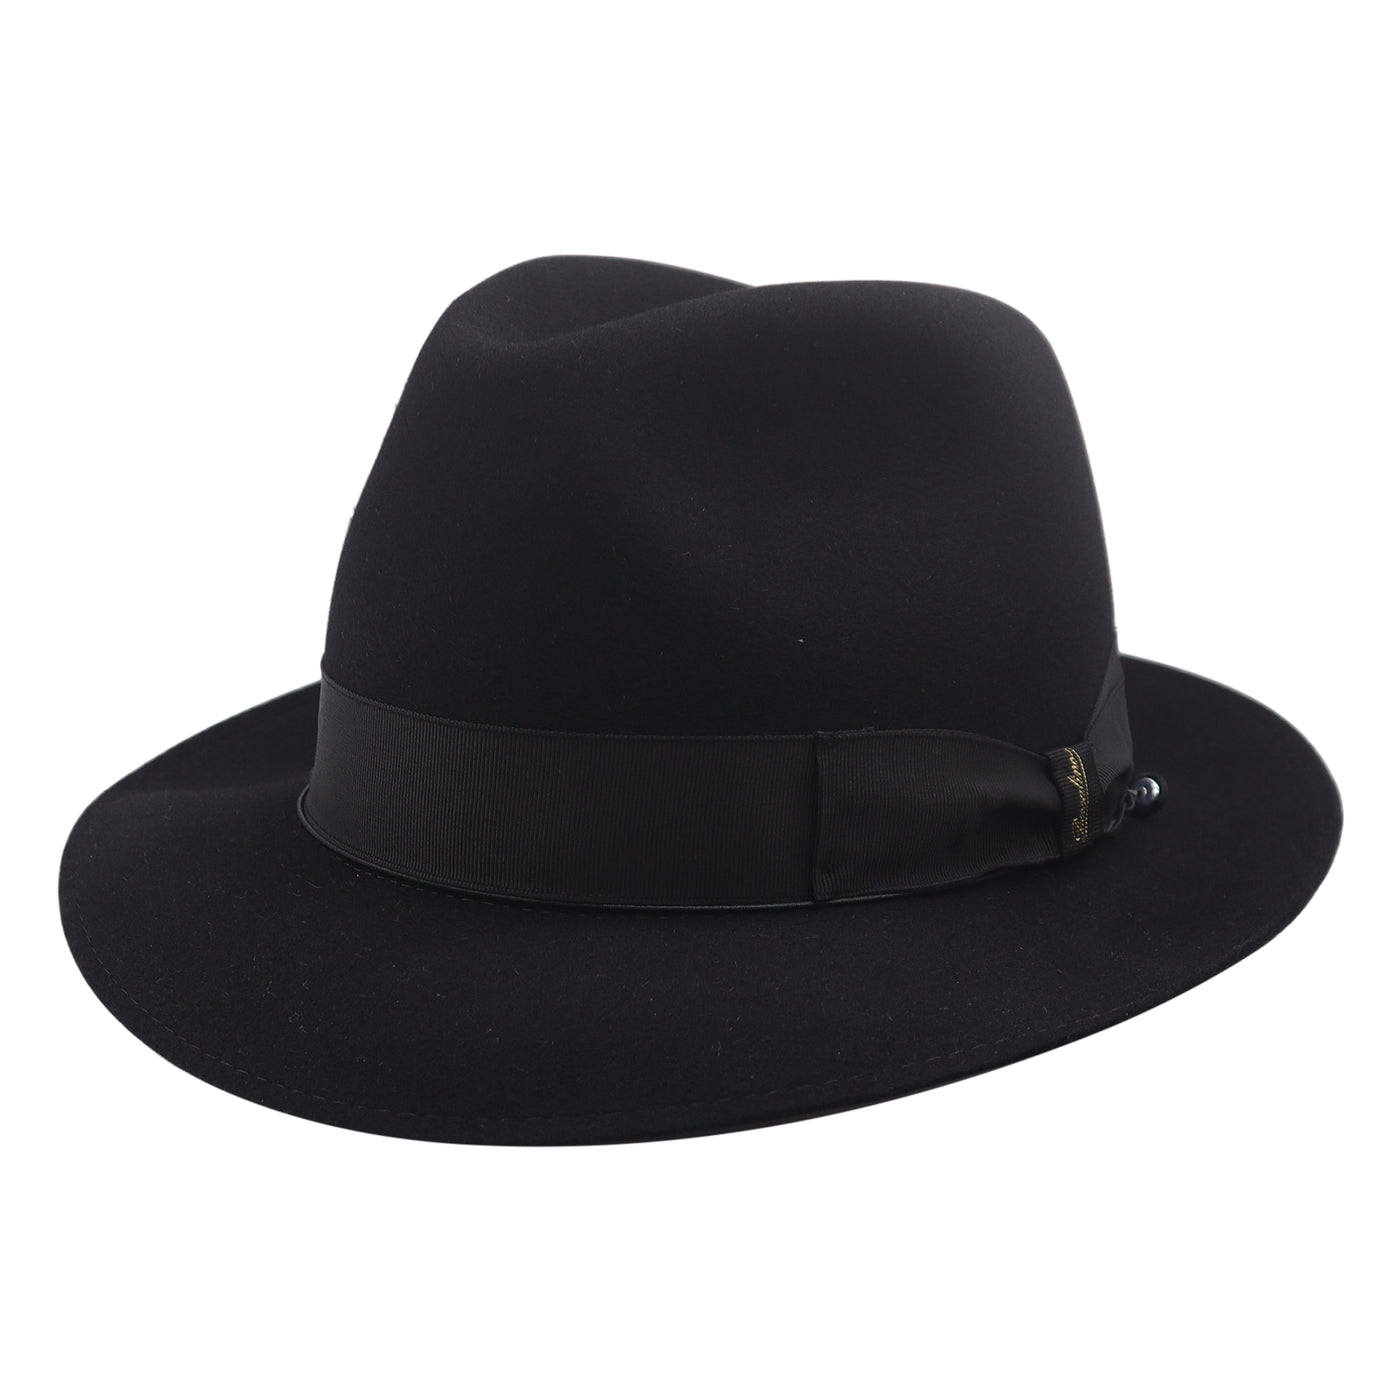 Minicio 200, product_type] - Borsalino for Atica fedora hat